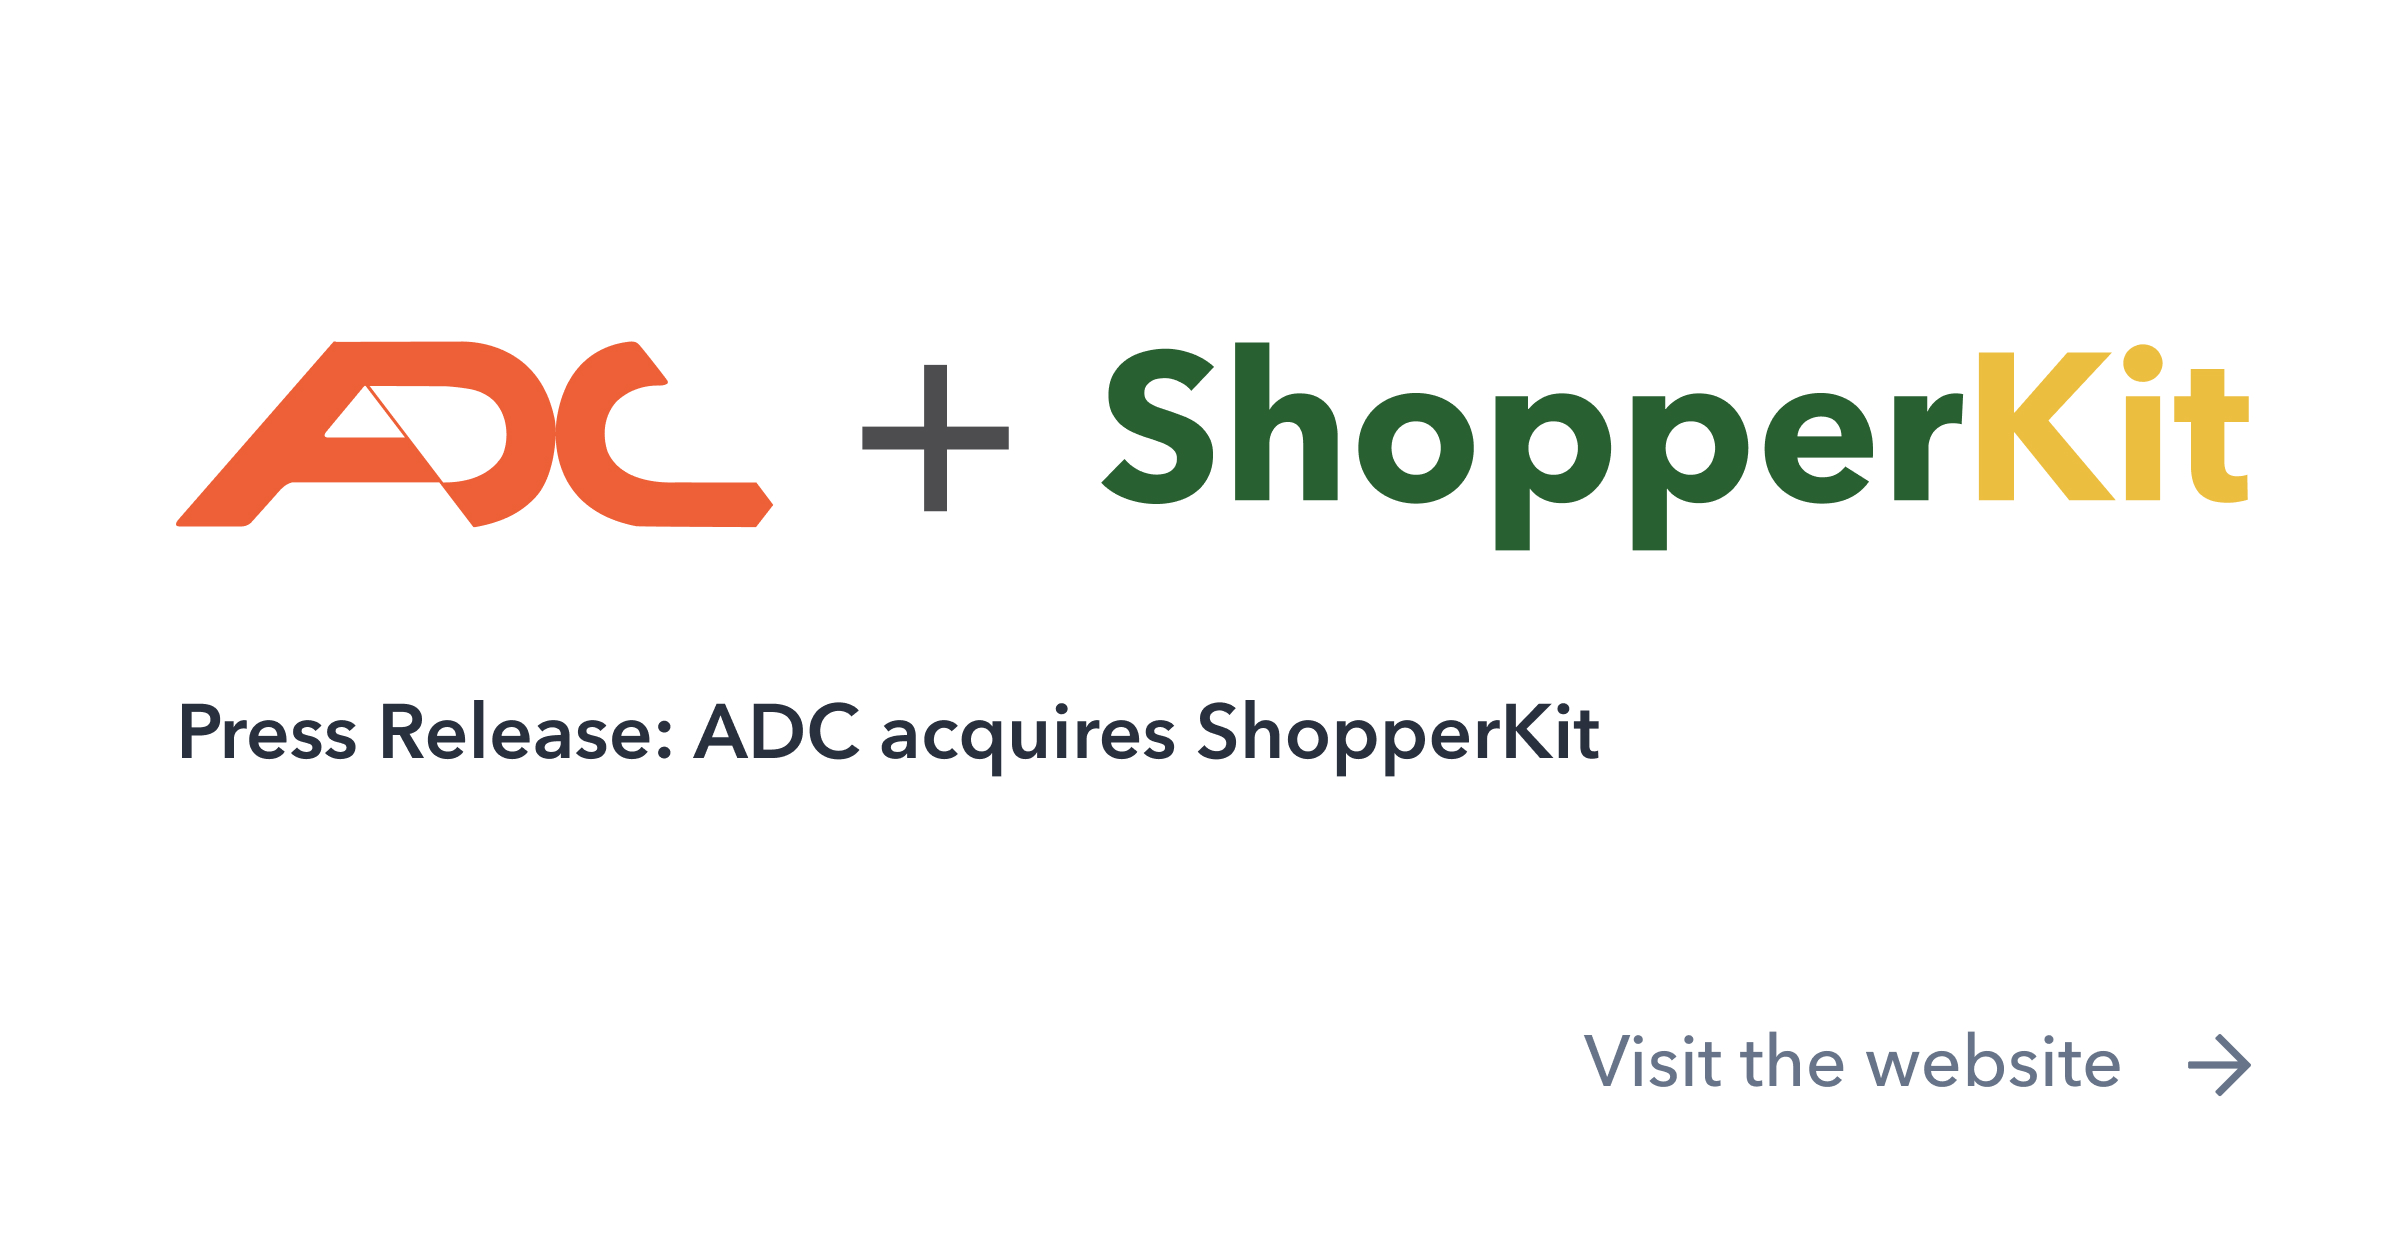 ADC + ShopperKit